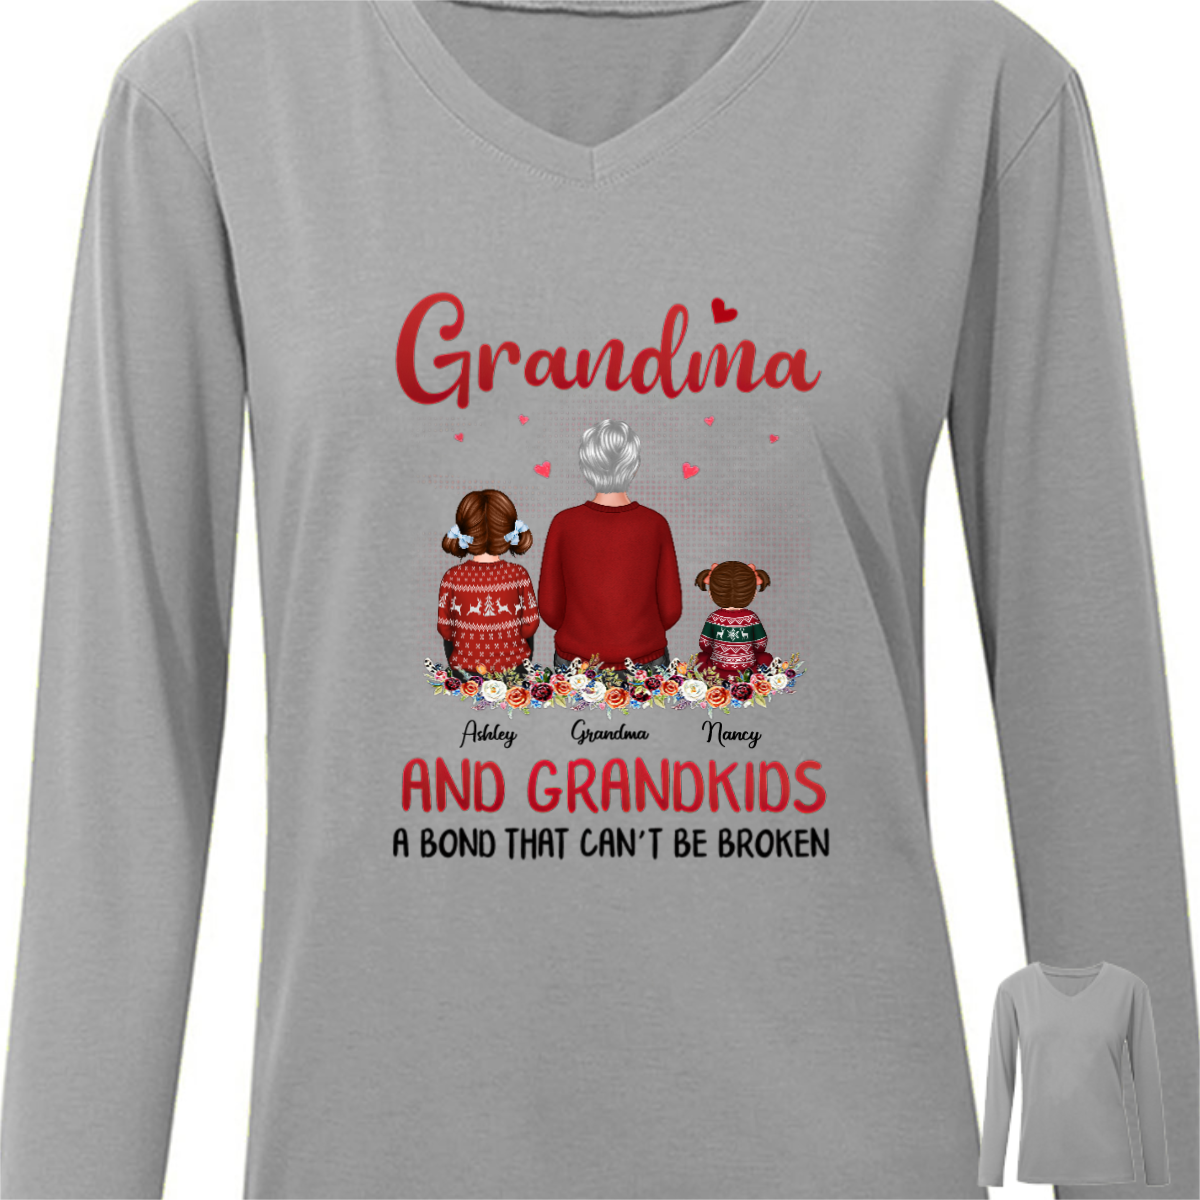 Grandma Grandkids Bond Can‘t Be Broken Personalized Long Sleeve Shirt